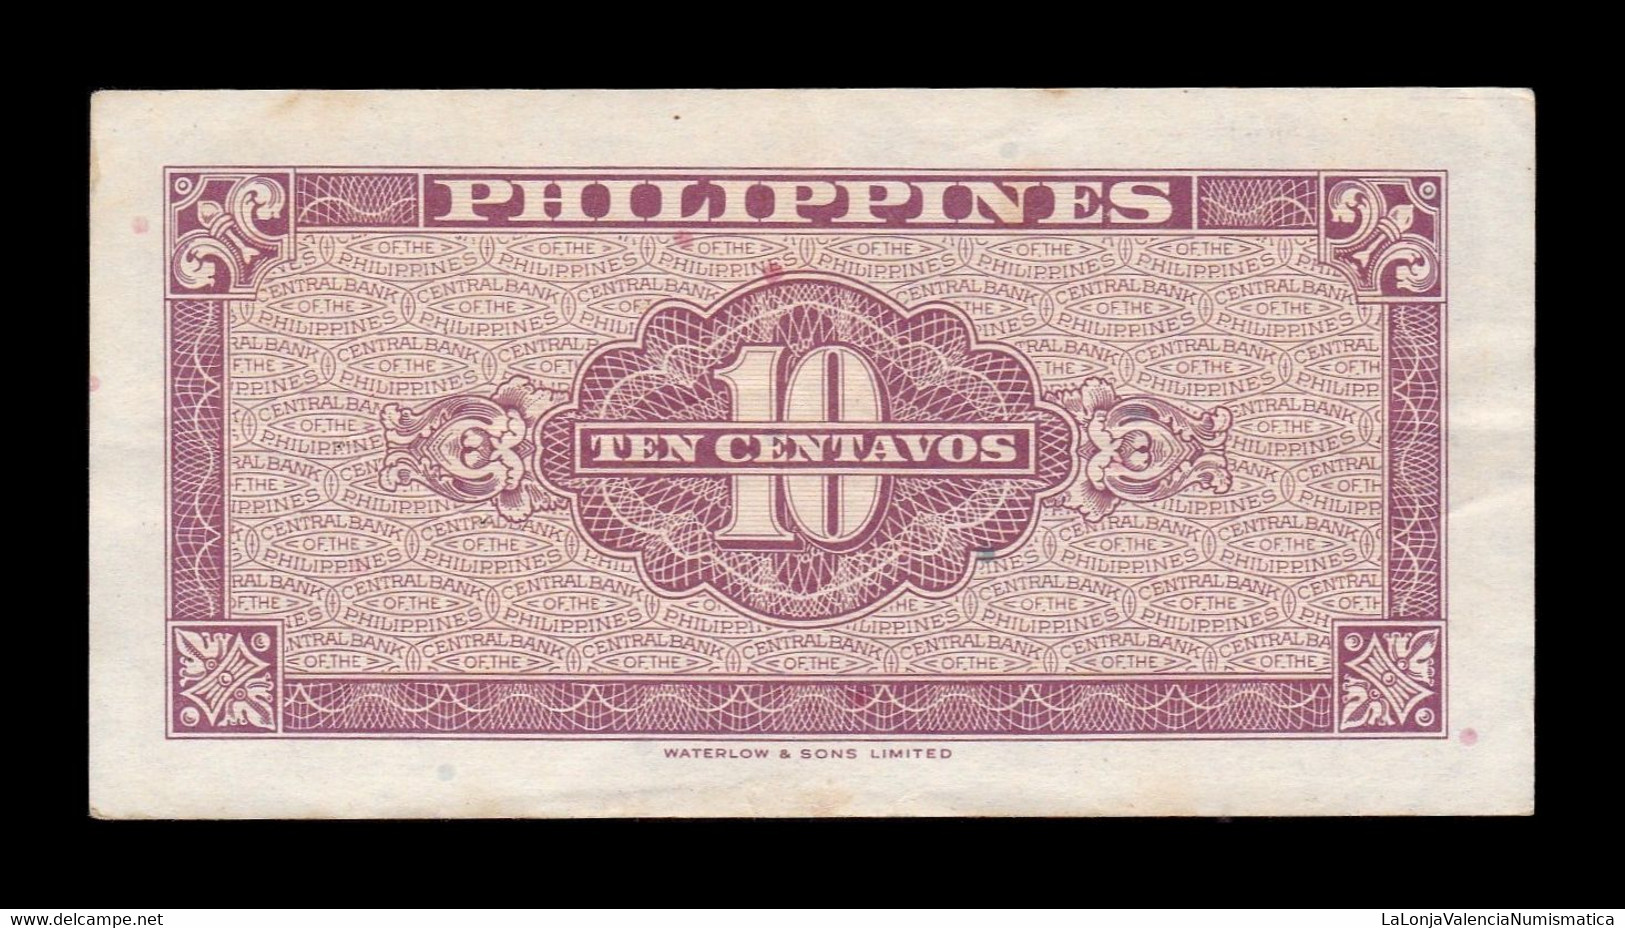 Filipinas Philippines 10 Centavos ND (1949) Pick 128 T.718 MBC/EBC VF/XF - Philippines